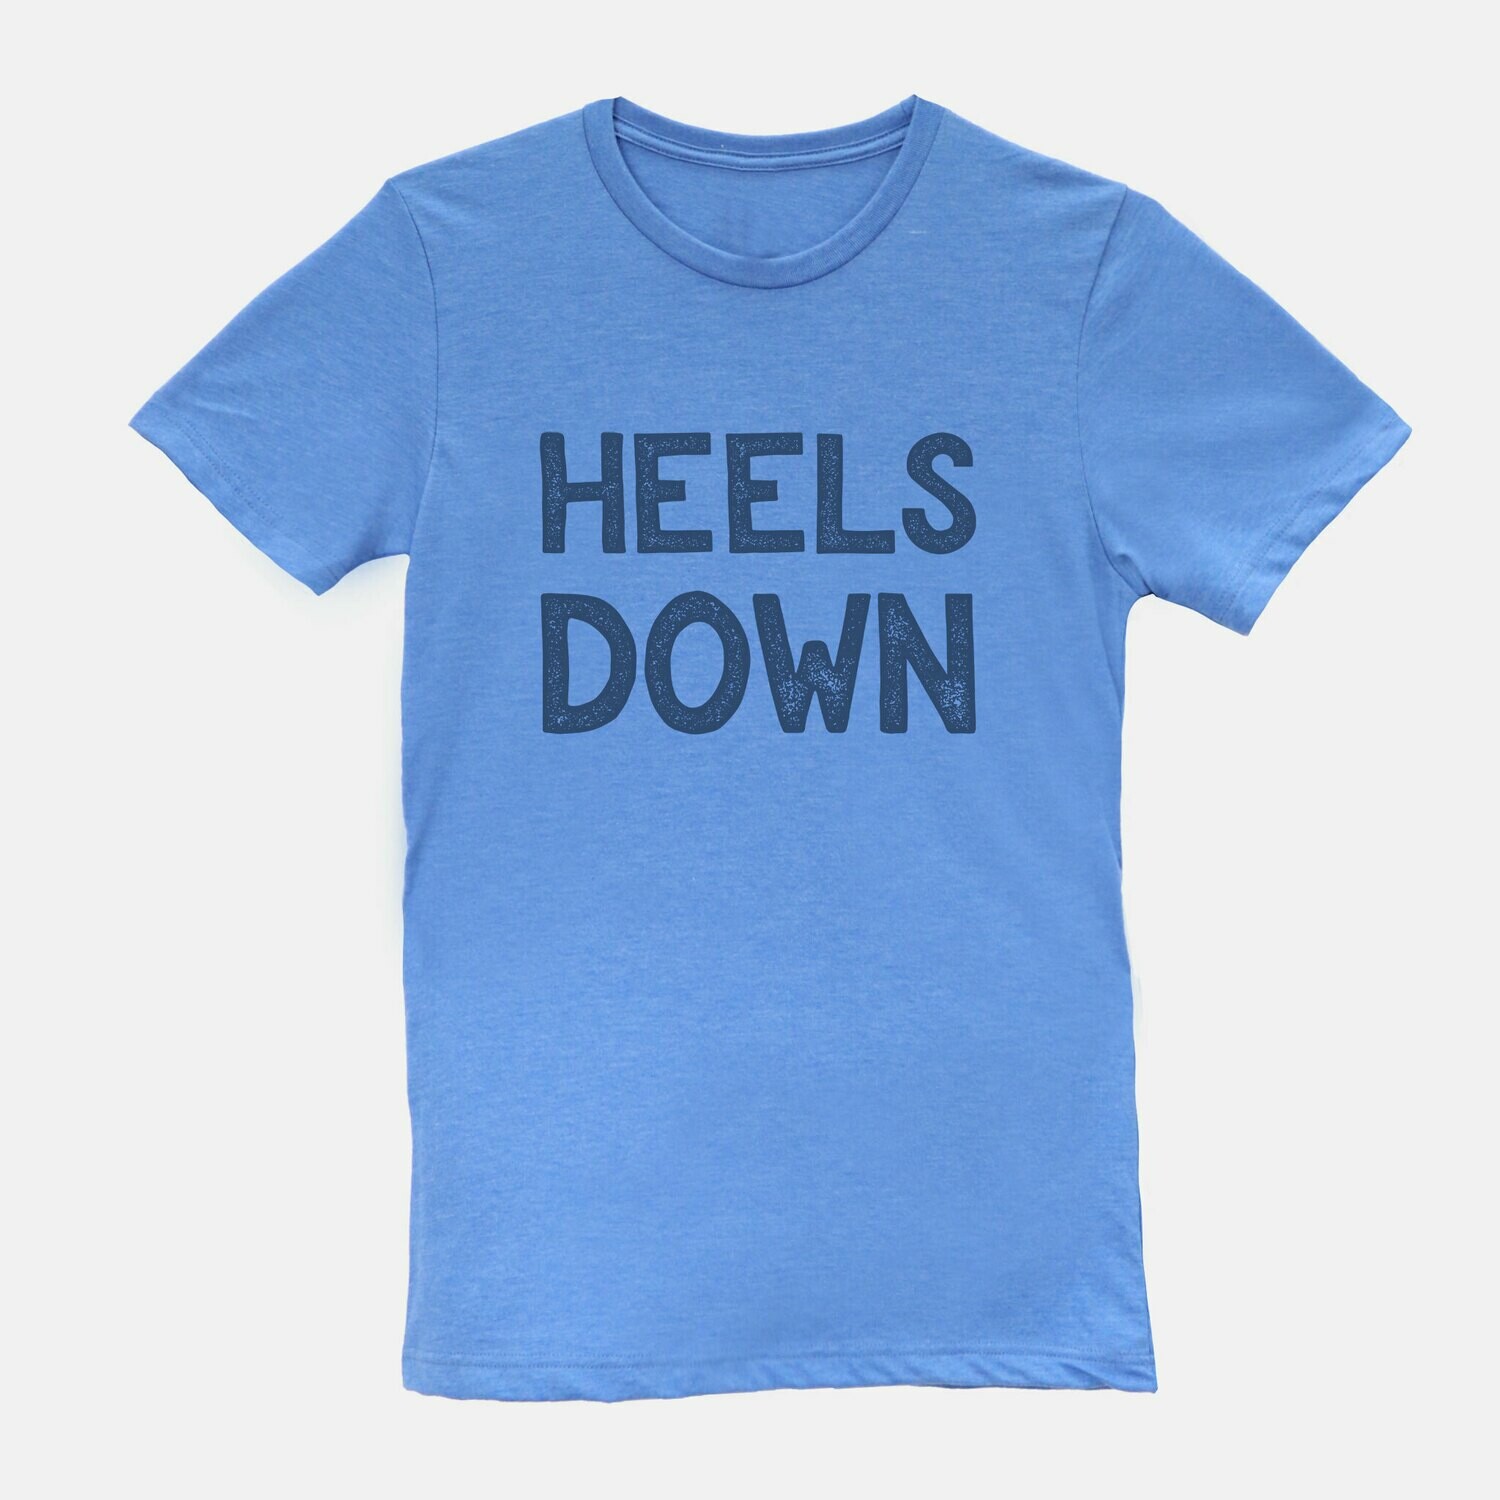 Heels Down Equestrian Horse T-shirt Tee